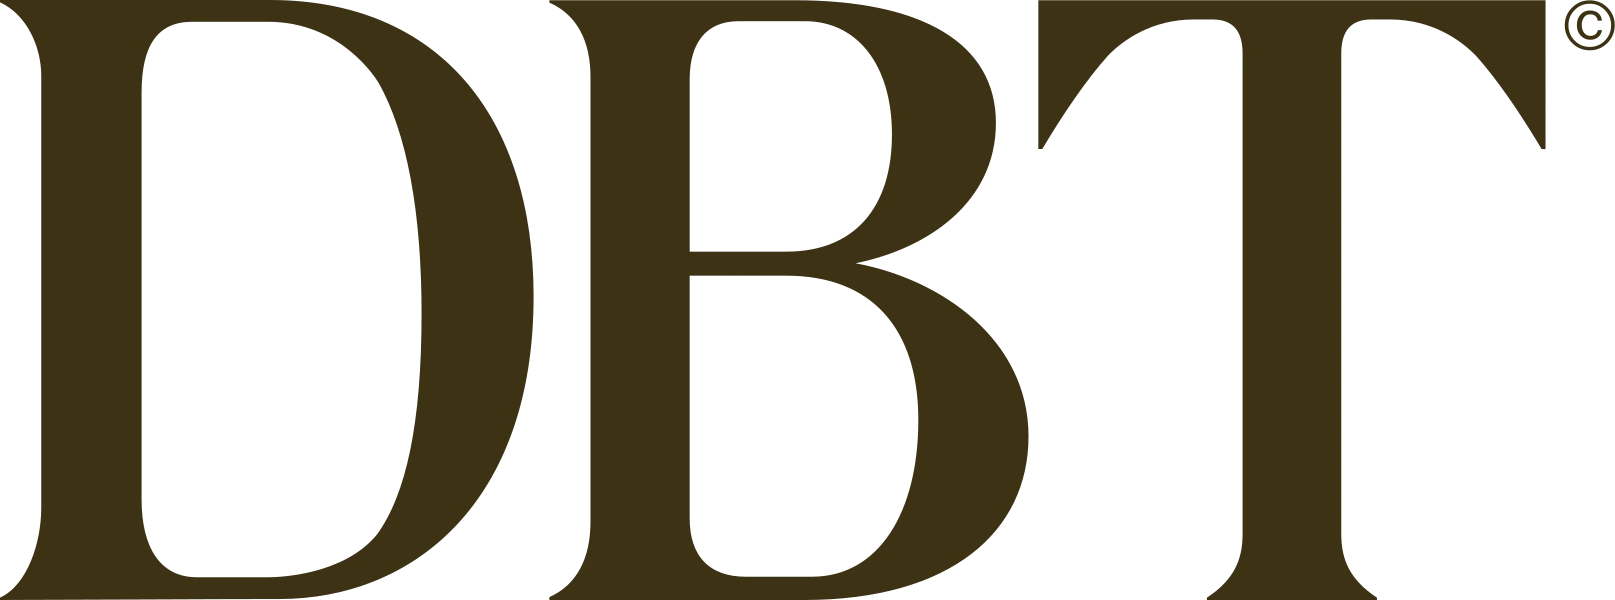 DBT Capital logo